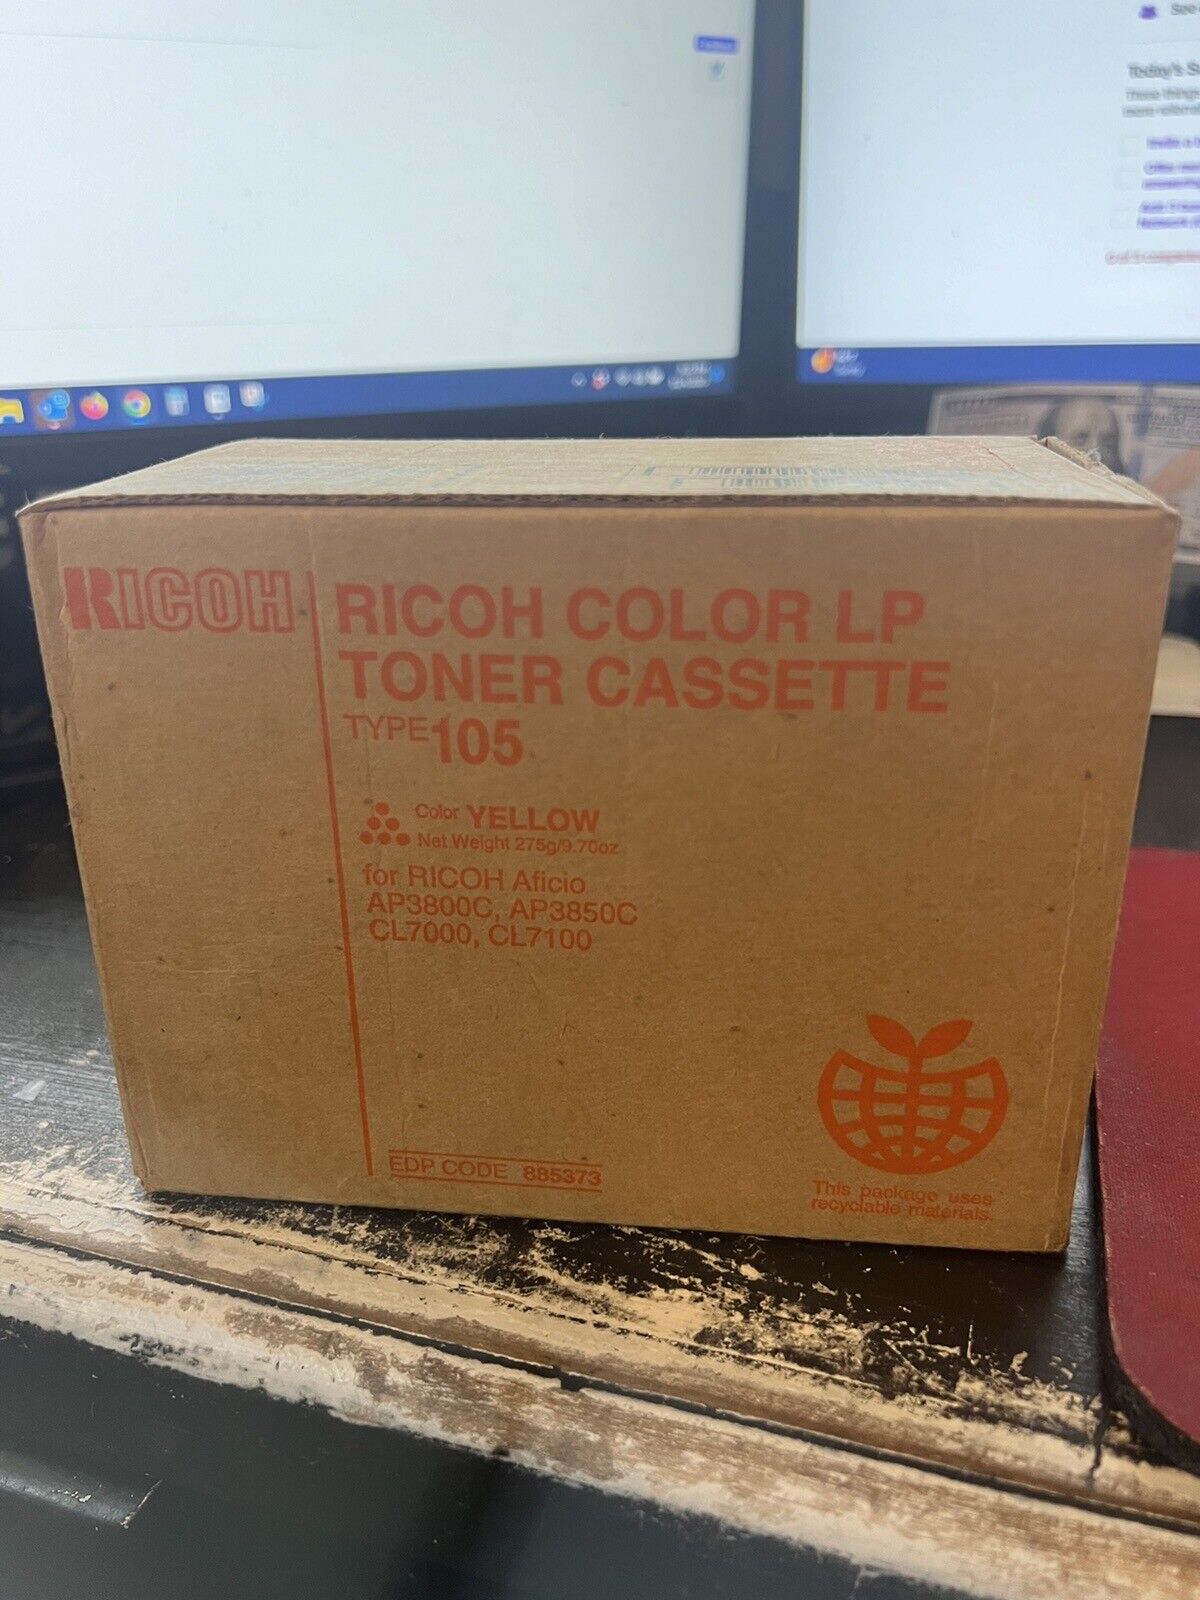 Genuine Ricoh Color LP Toner Cassette Type 105 Yellow 885373 F. Shipping